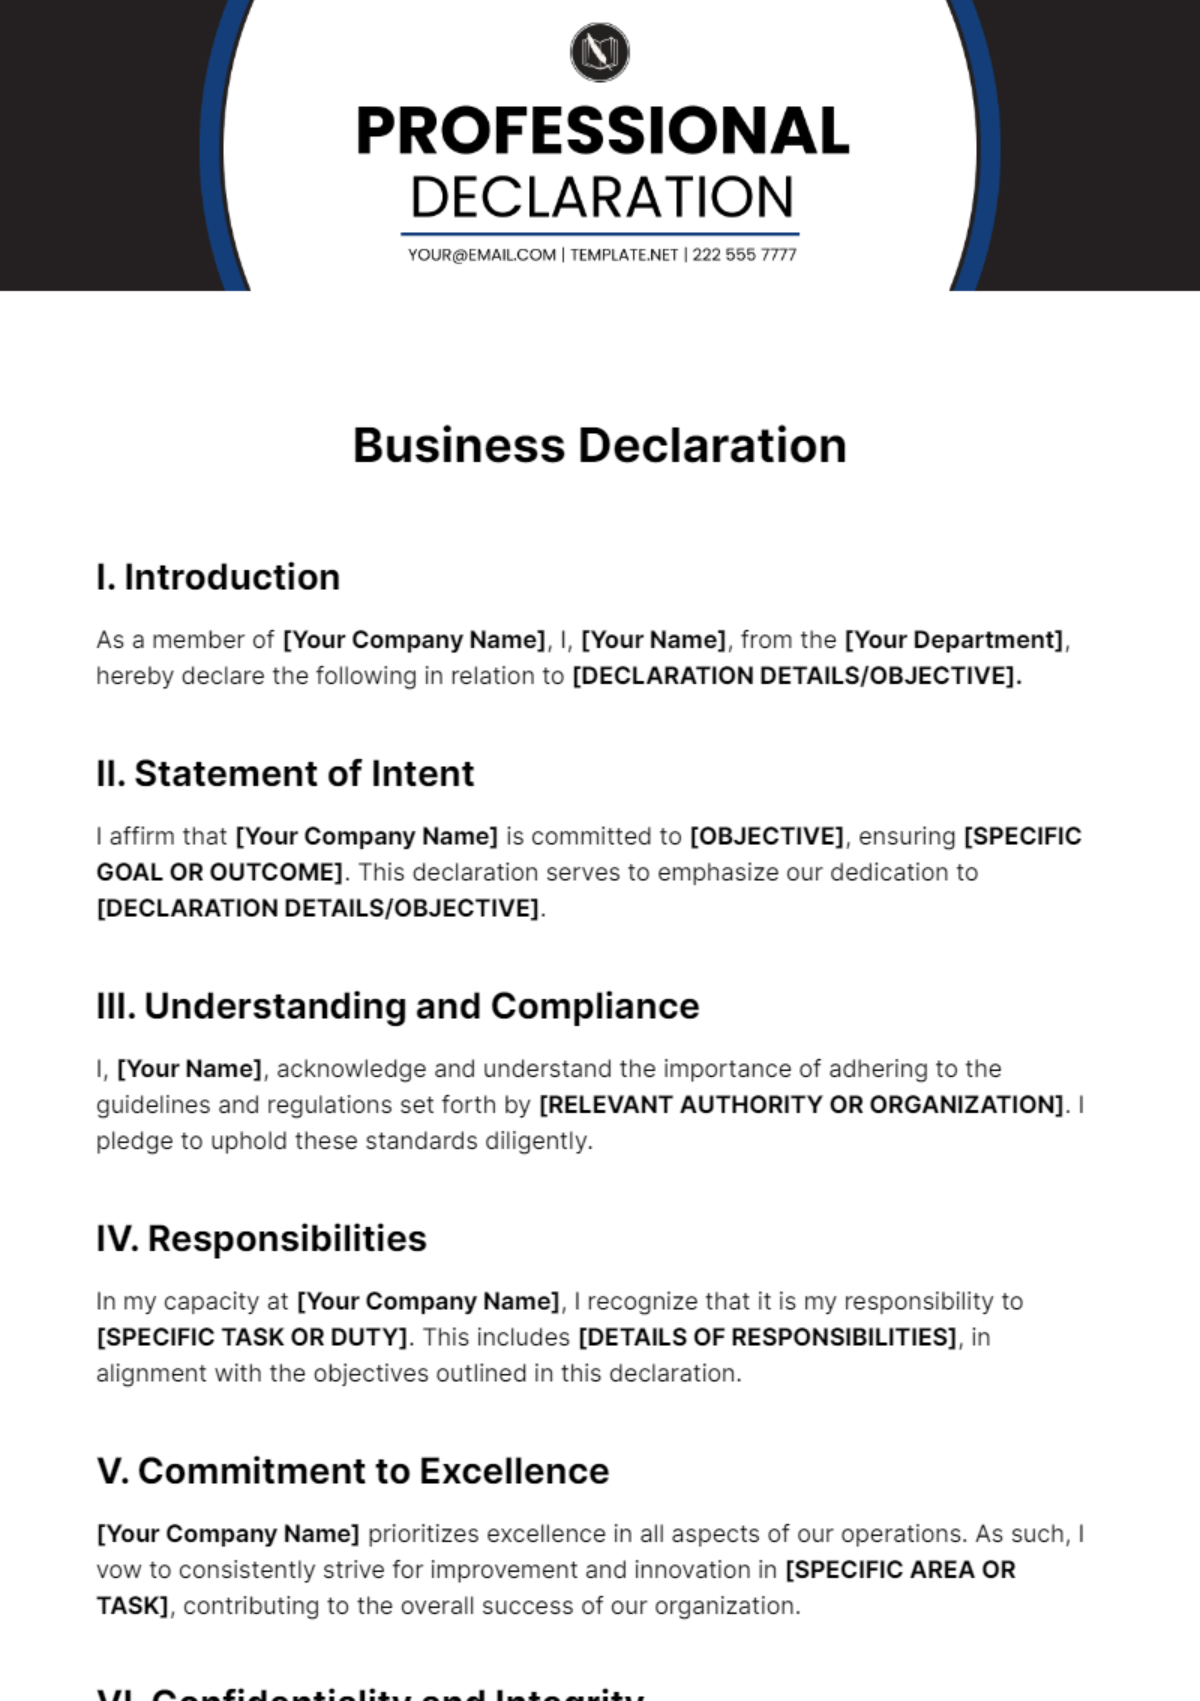 Business Declaration Template